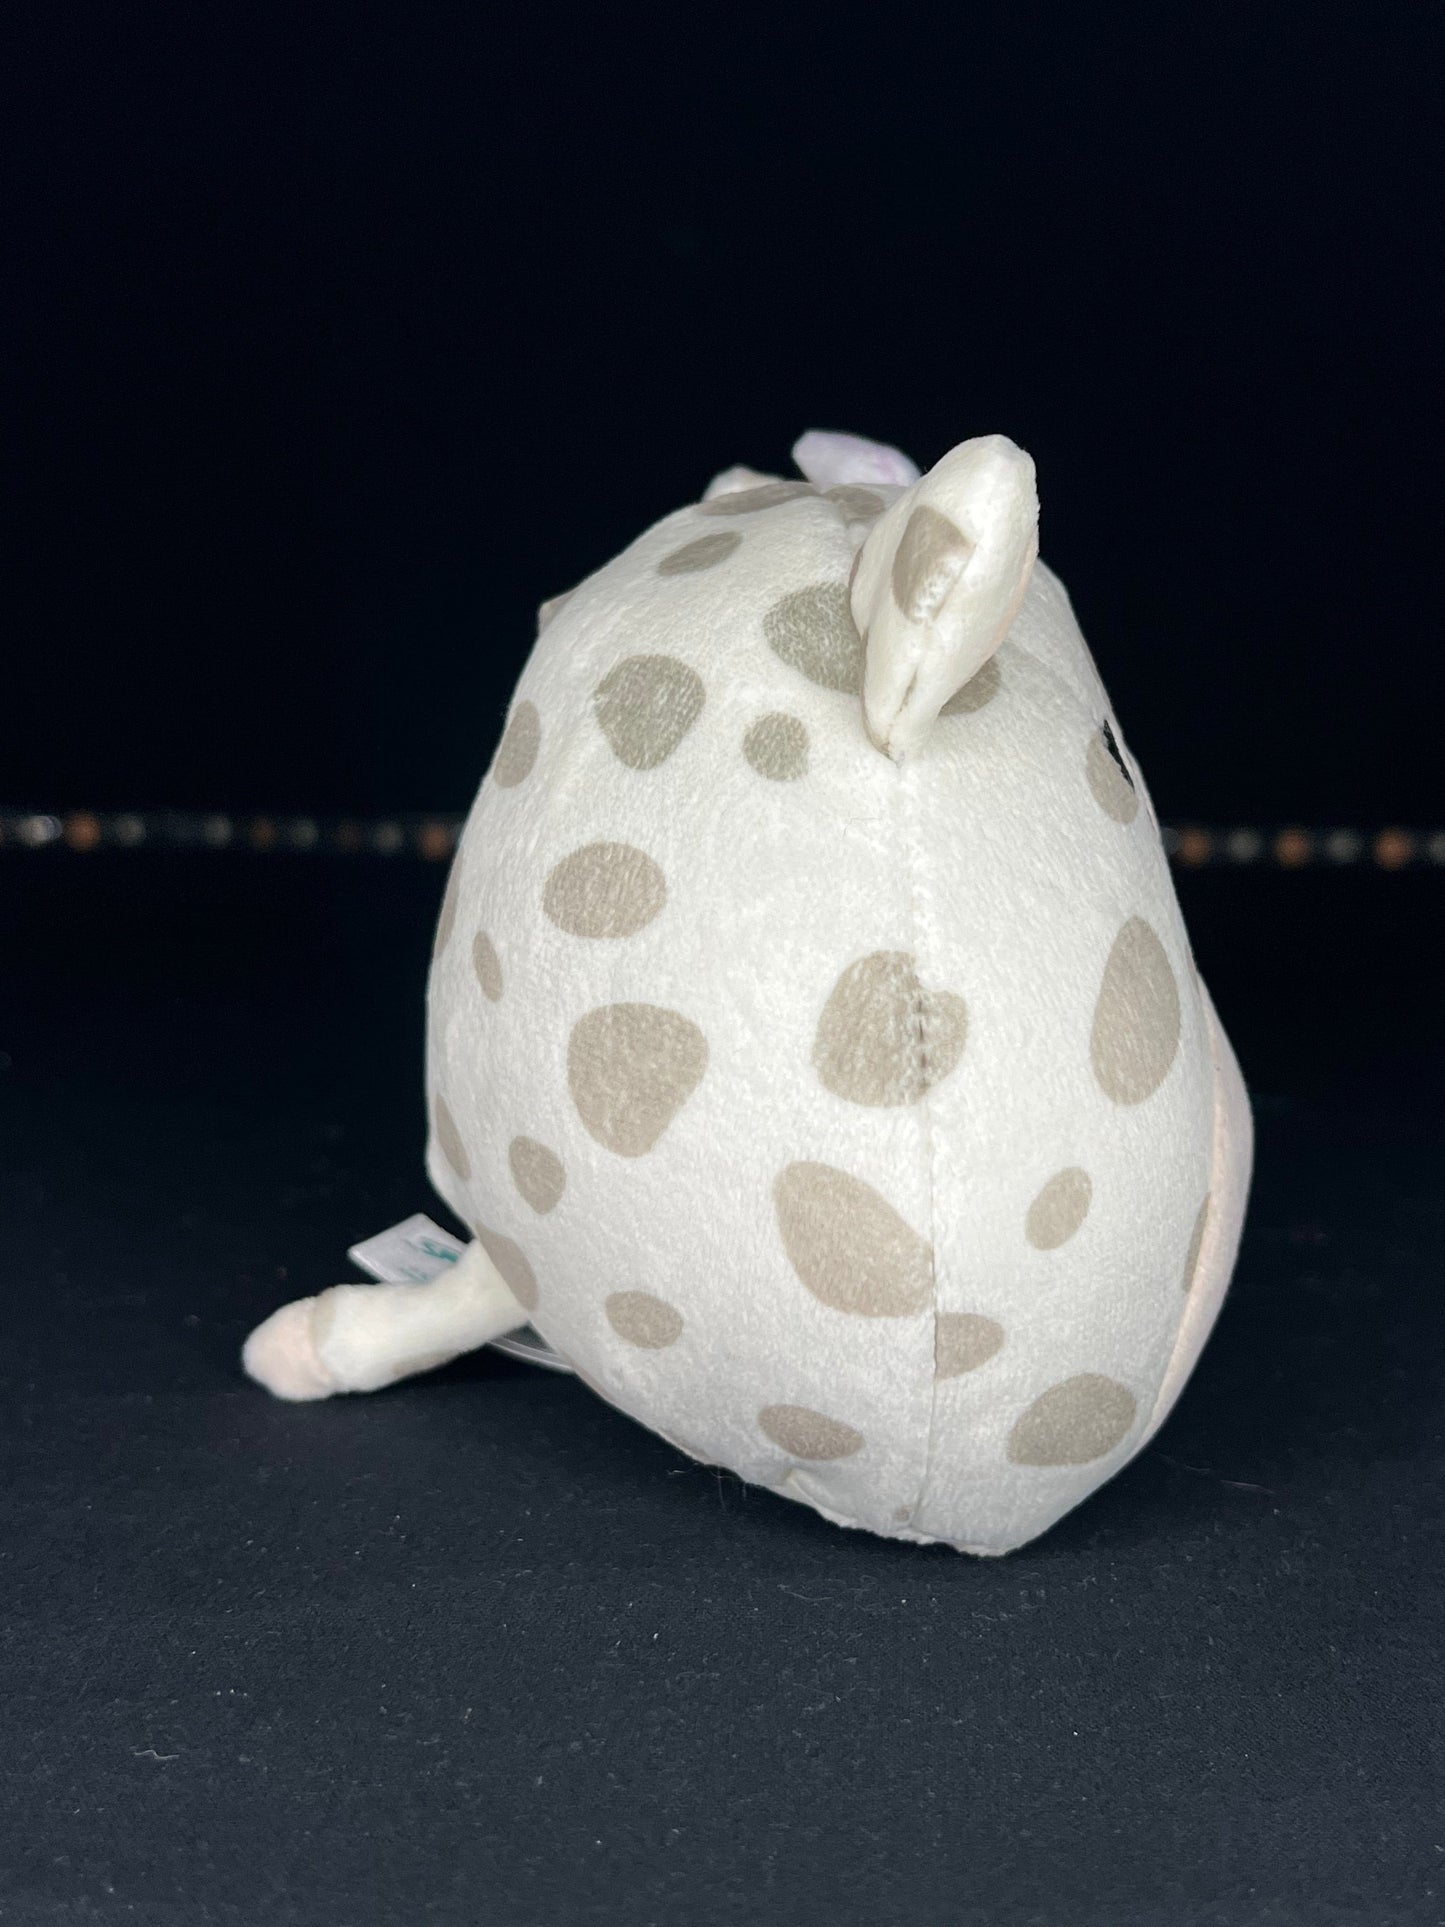 Squishmallow 4.5” Rosie the Pig.